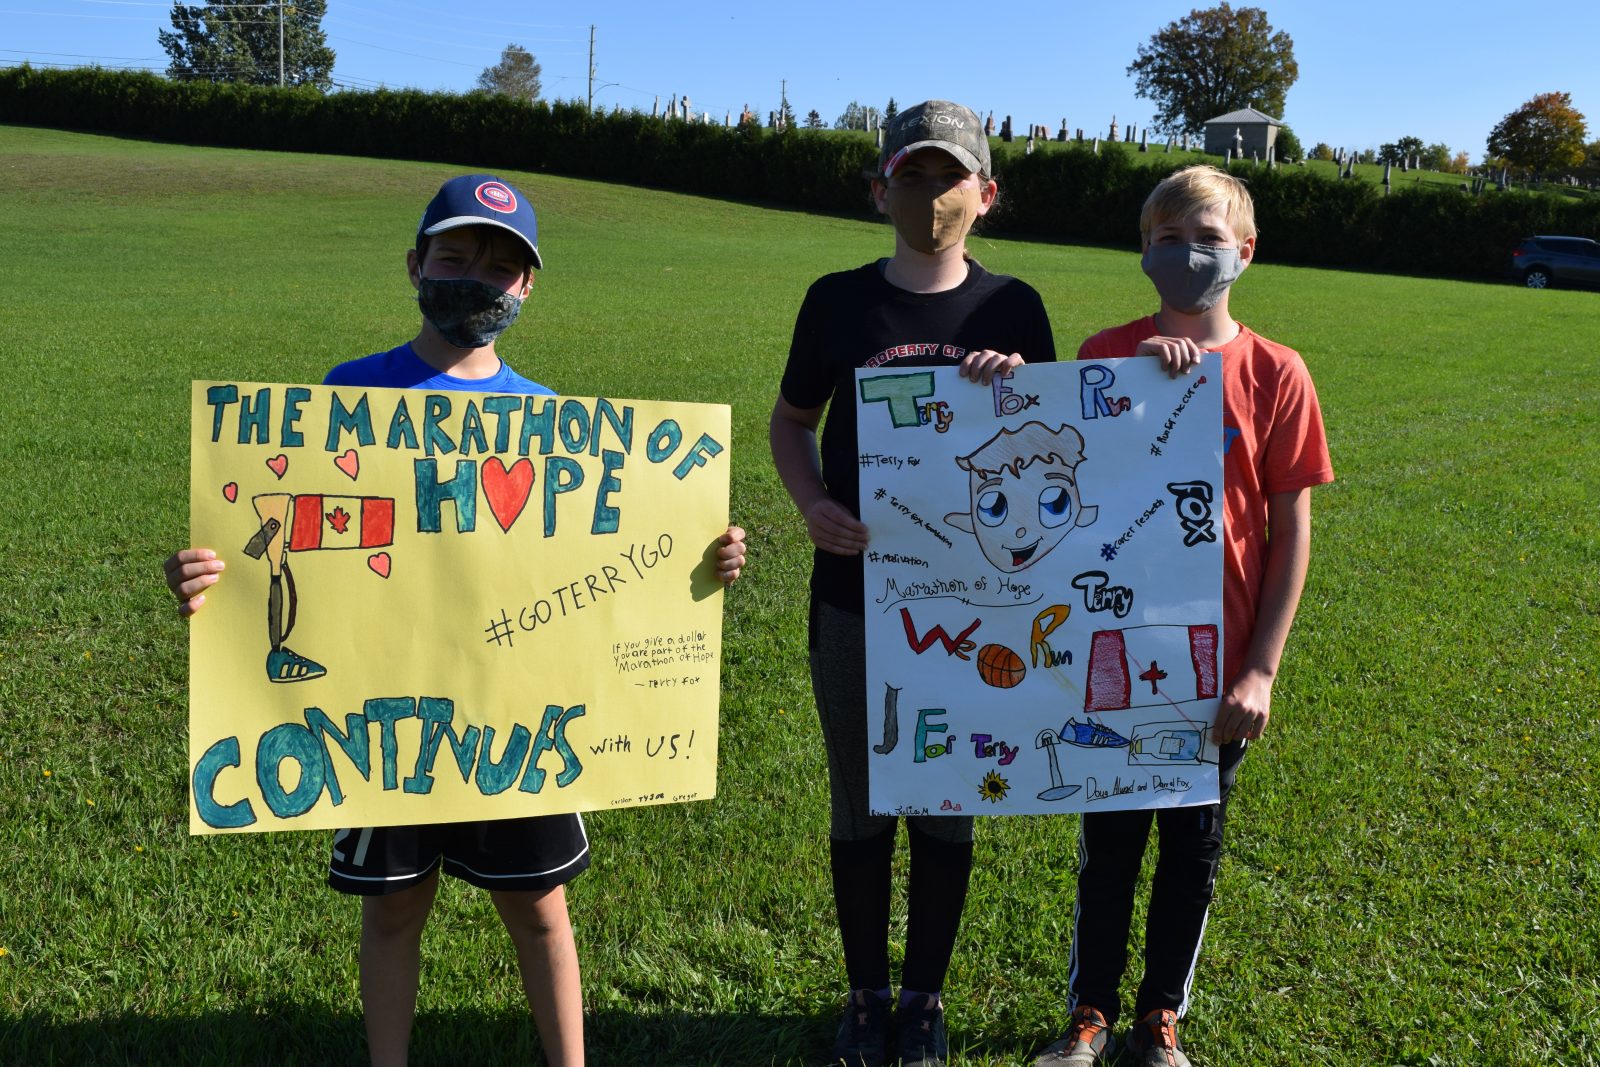 St. Andrews Catholic School Terry Fox Run raises over $5K